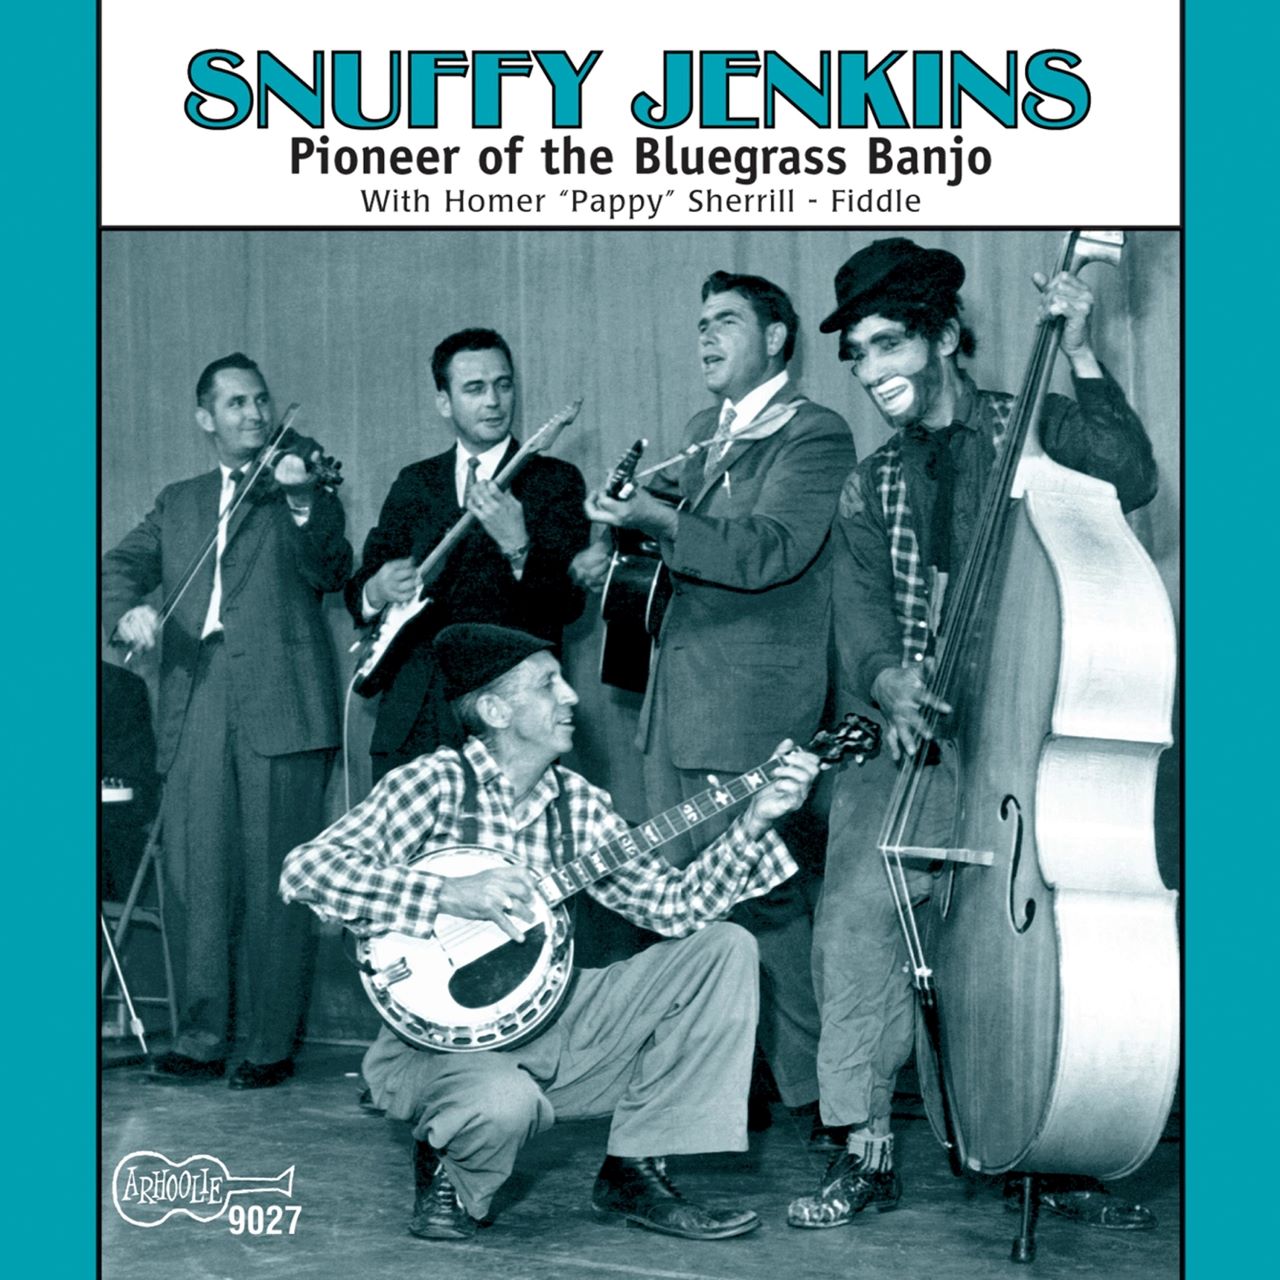 Snuffy Jenkins - Pioneer Of The Bluegrass Banjo covewr album